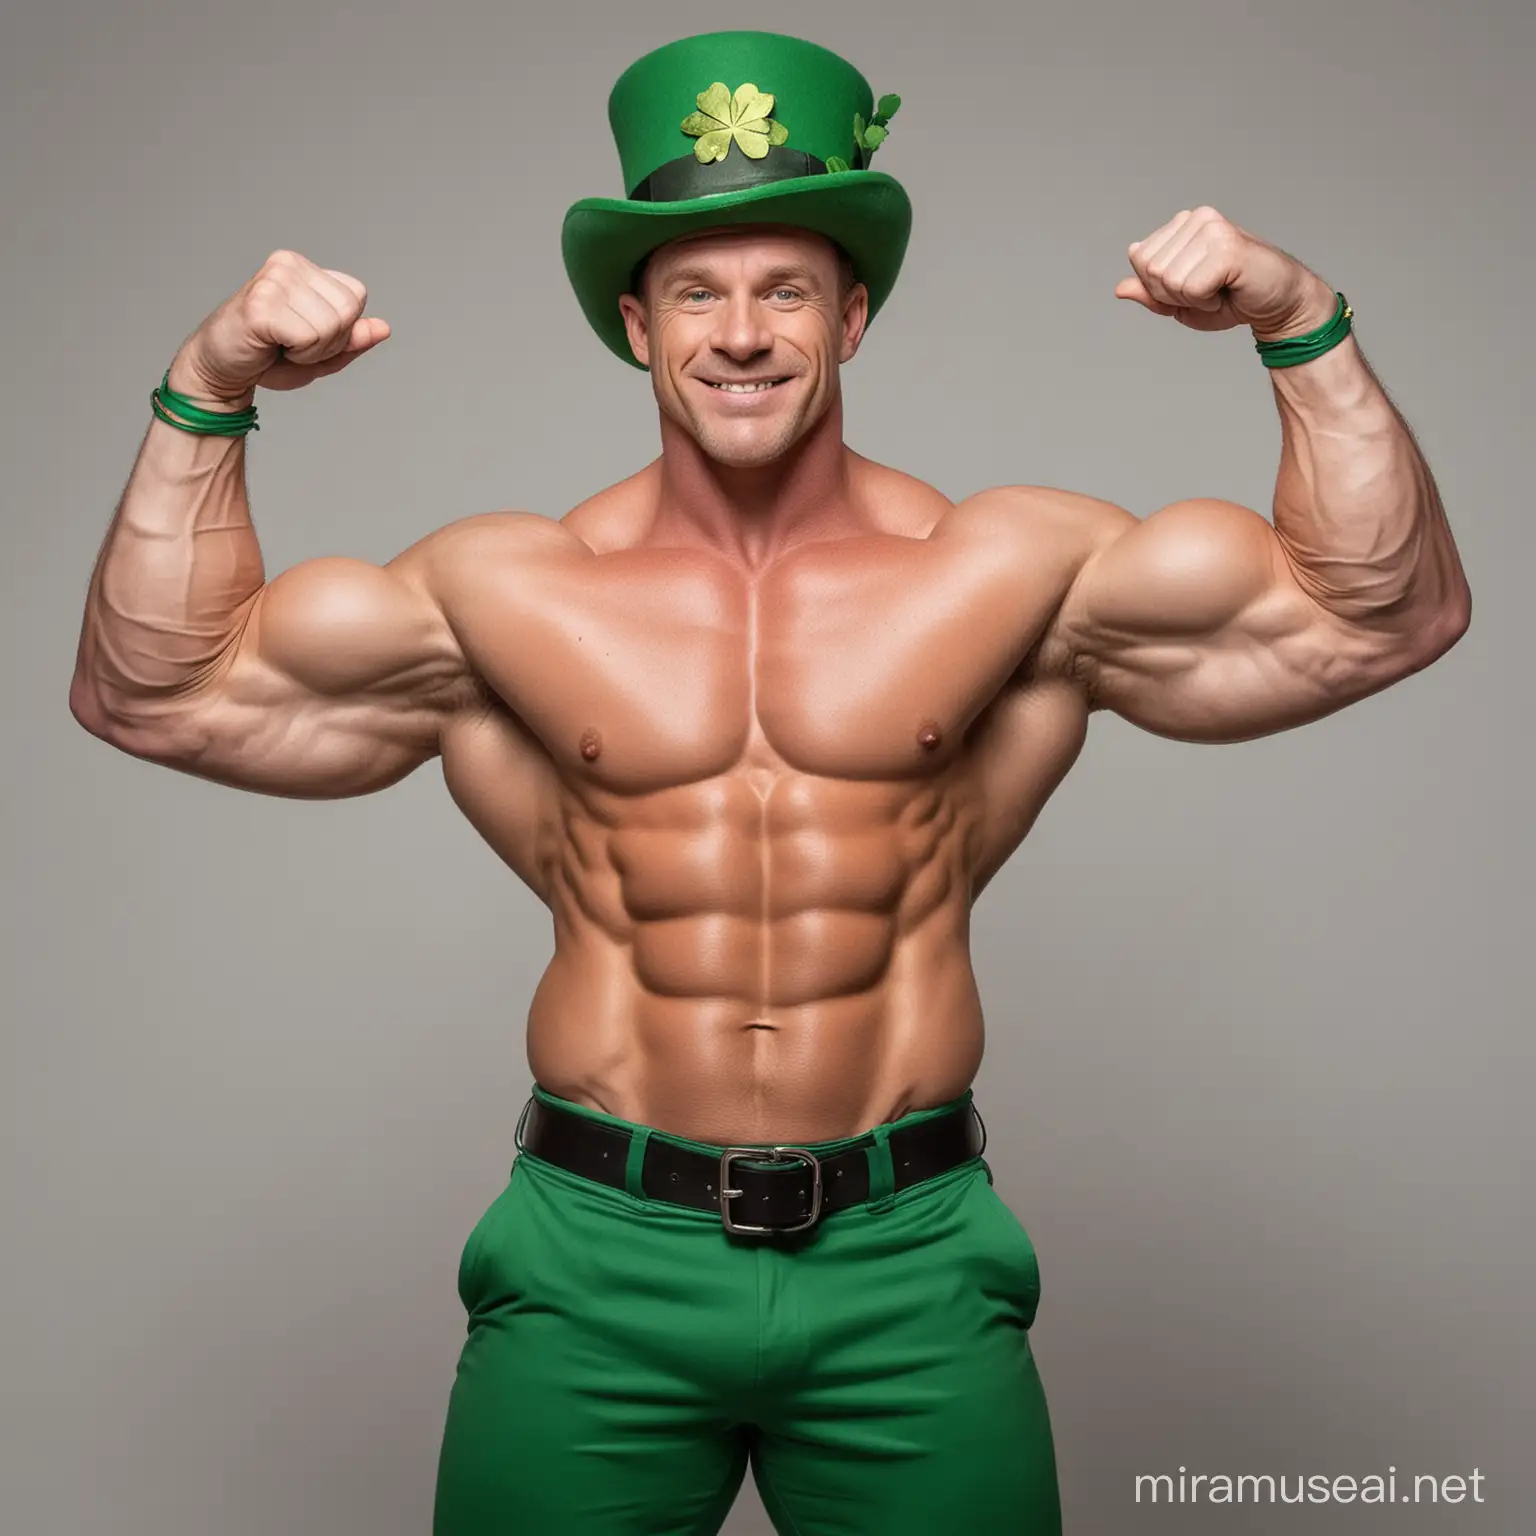 PixarStyle Topless Beefy Irish Leprechaun IFBB Bodybuilder wearing unbuttoned Irish Green Attire Outfit Tall Green Hat Flexing his Big Strong Arm and Holding Irish Shamrocks